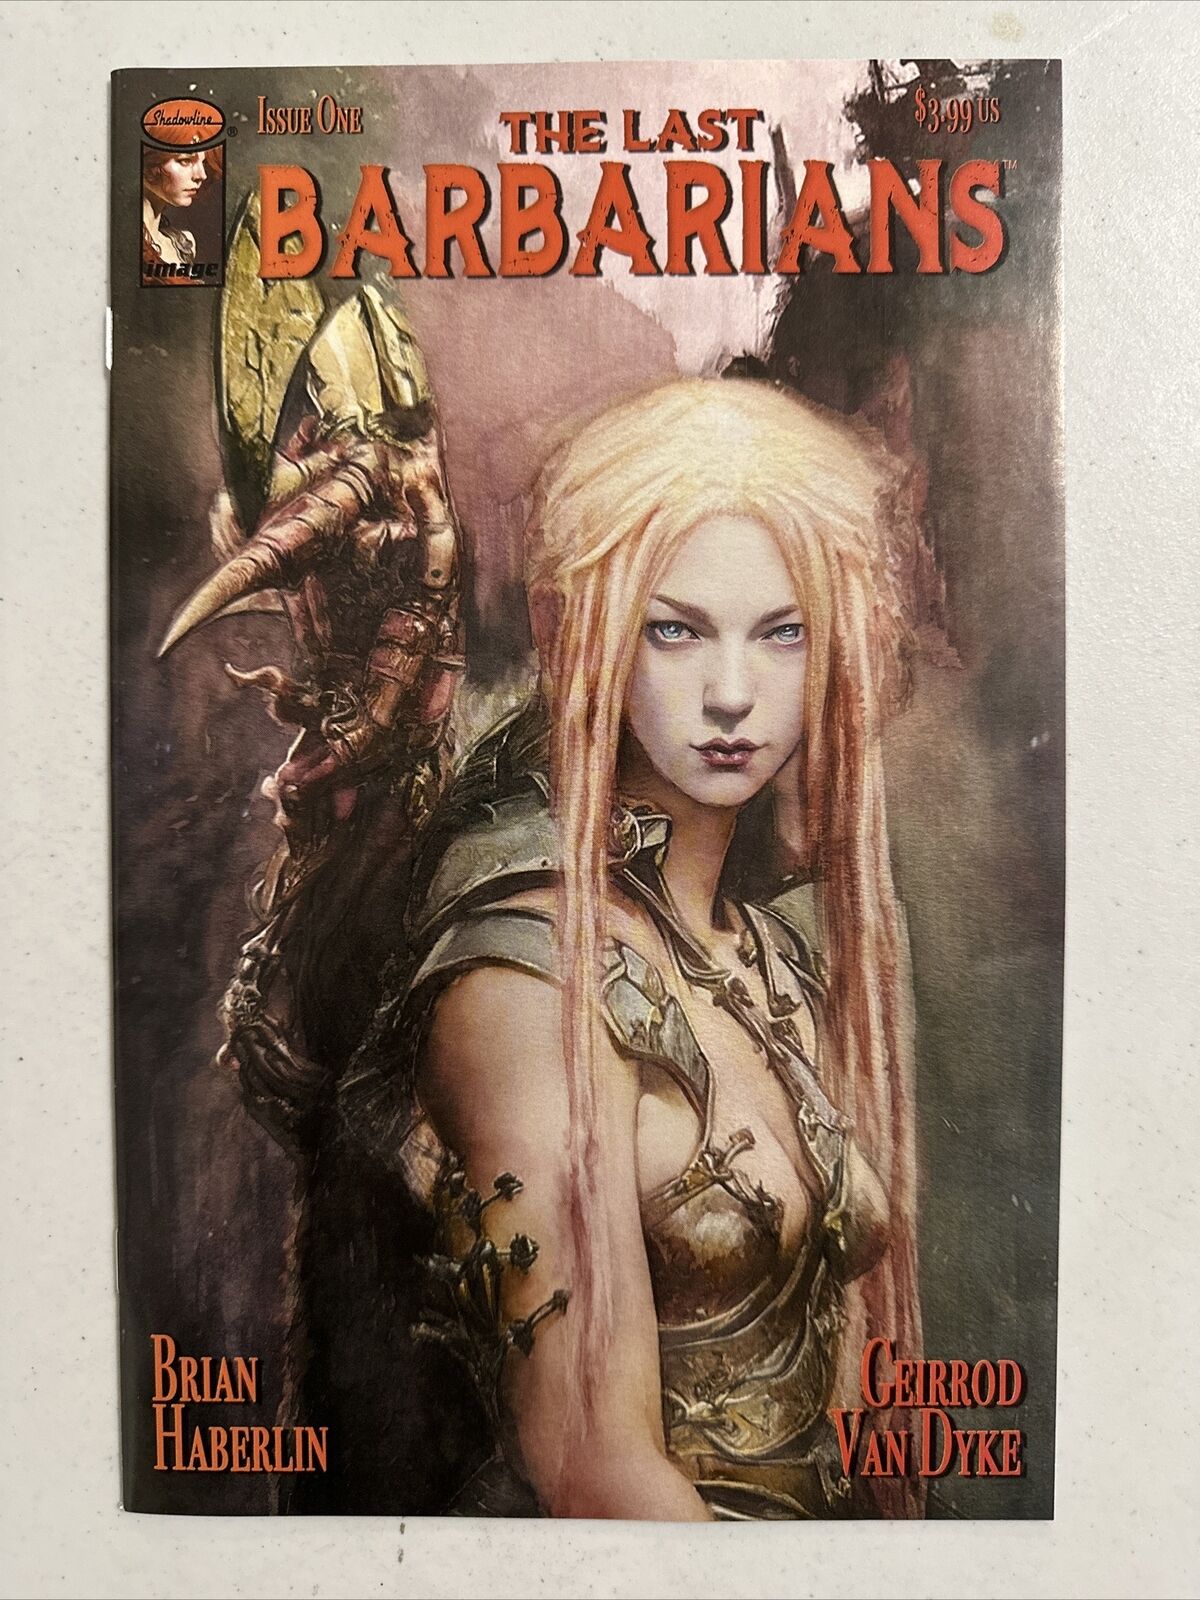 The Last Barbarians #1 Image Comics HIGH GRADE COMBINE S&H